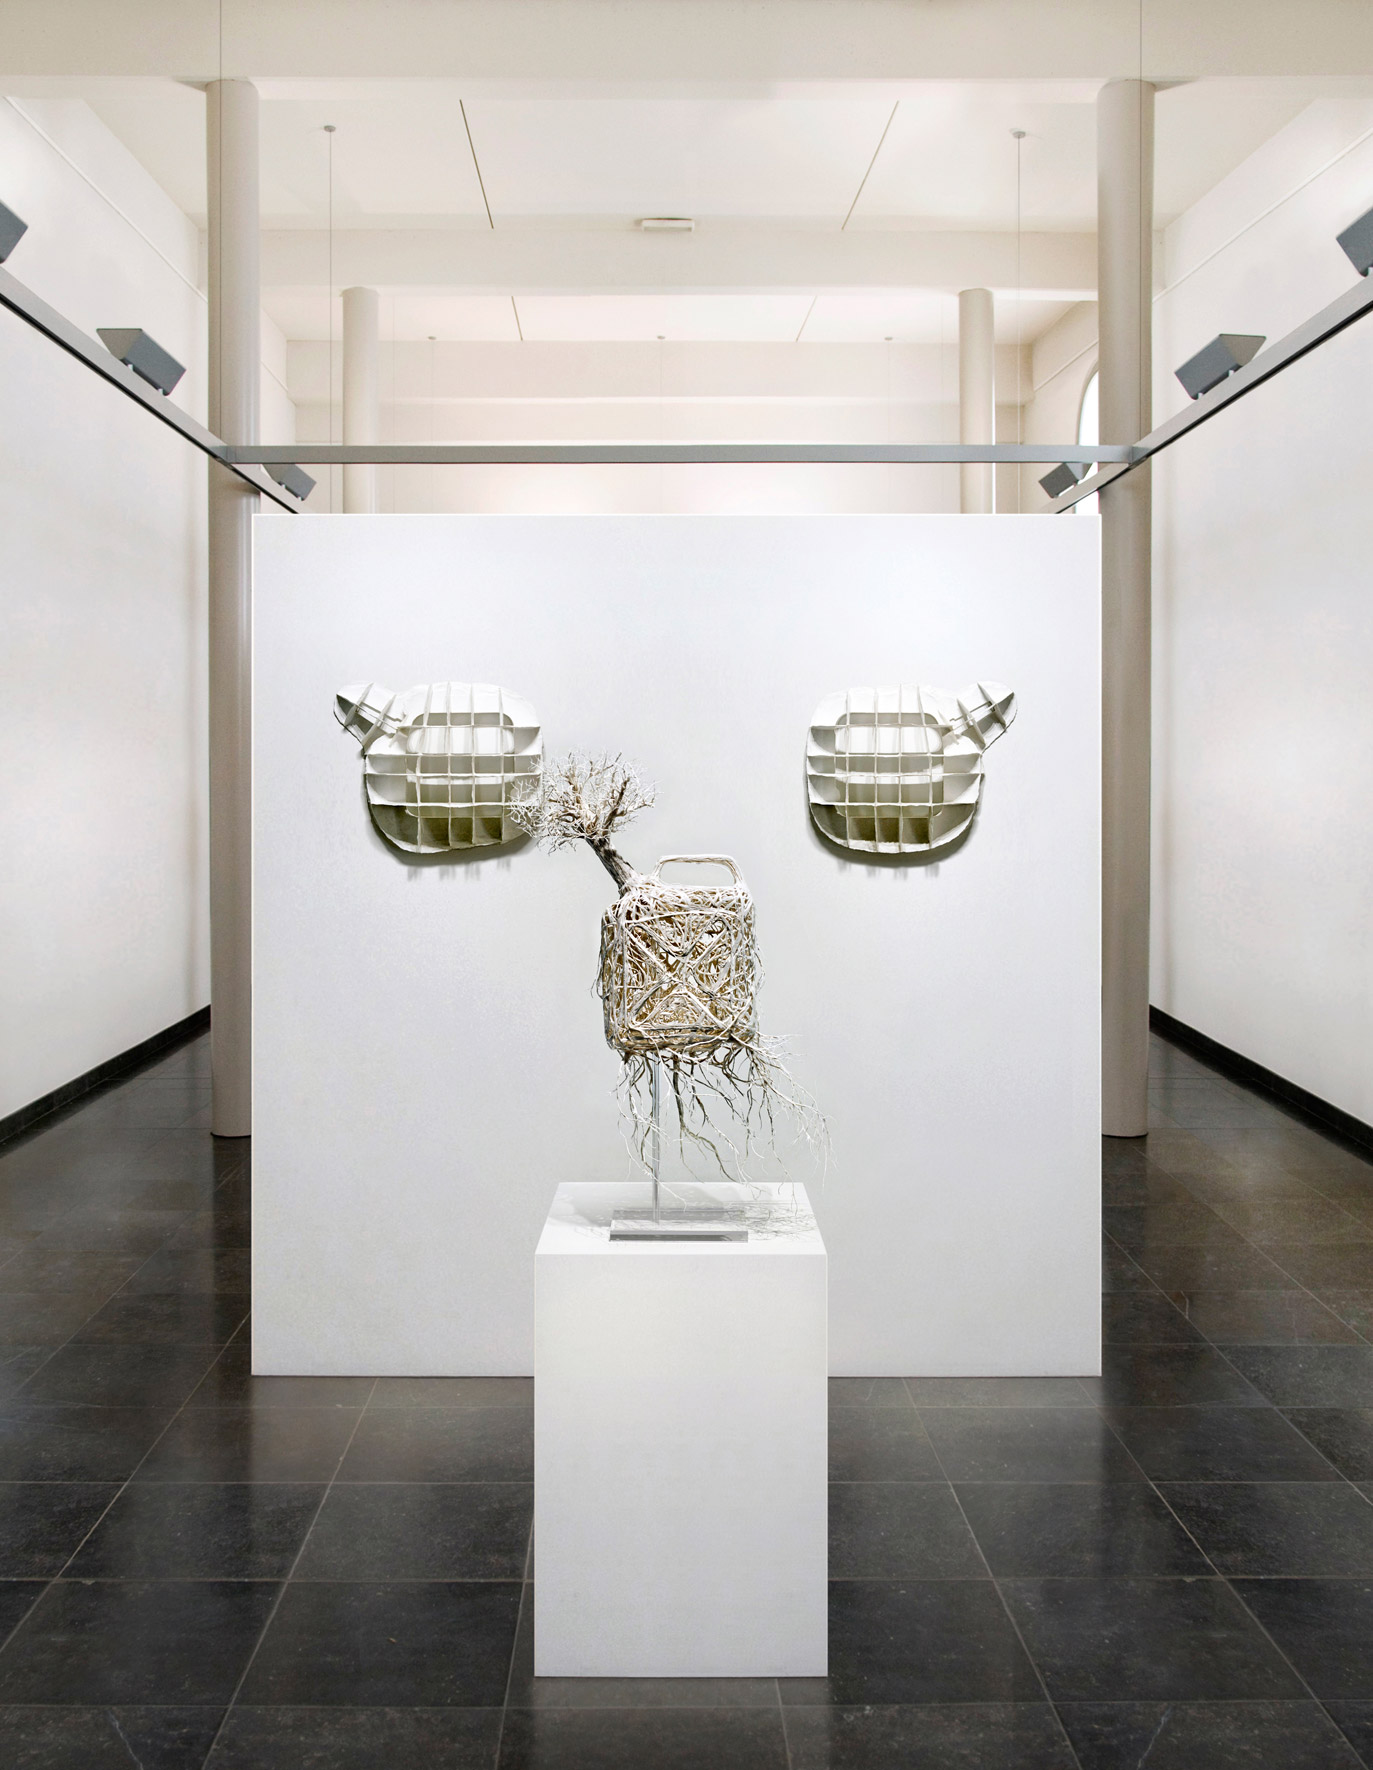 two sculptures artwork exhibit by Tanya Vogelzang called "Bonsai"